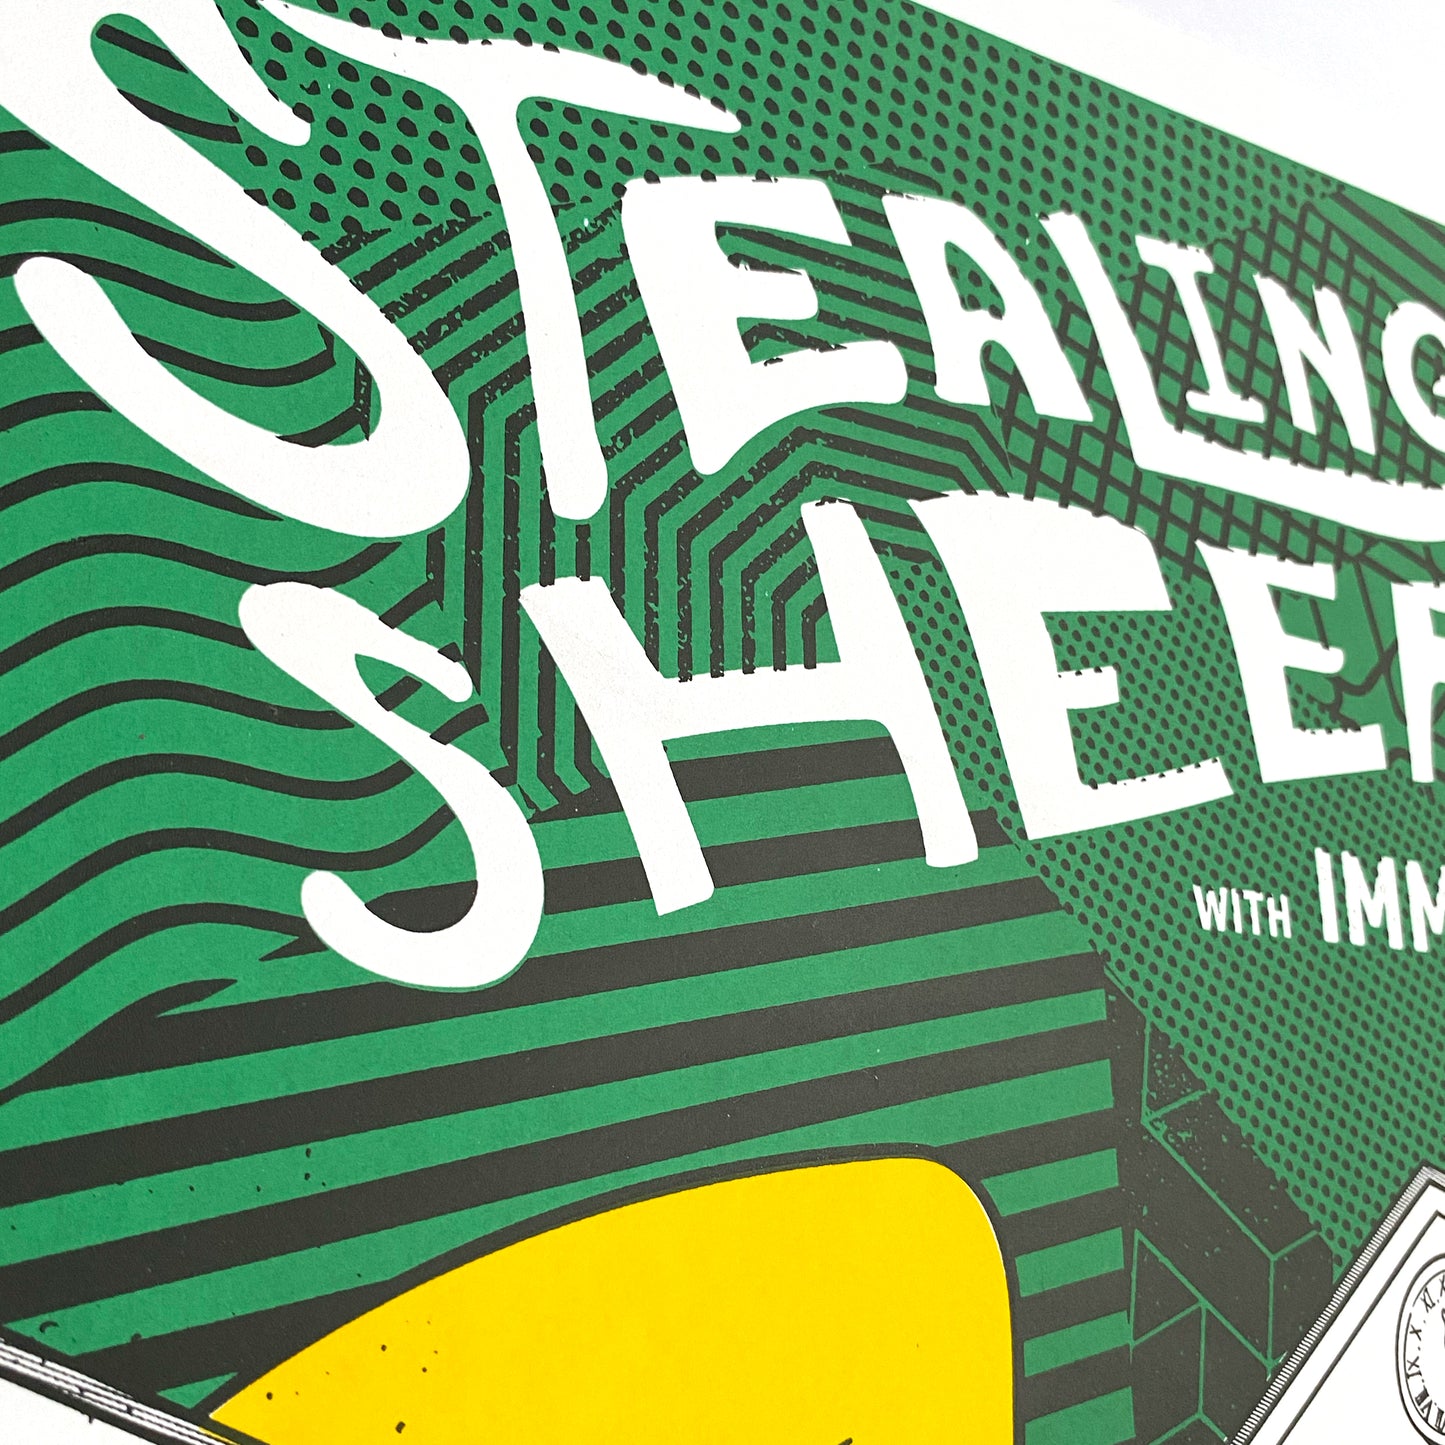 Stealing Sheep & Immix Ensamble at the Bluecoat Liverpool 2015